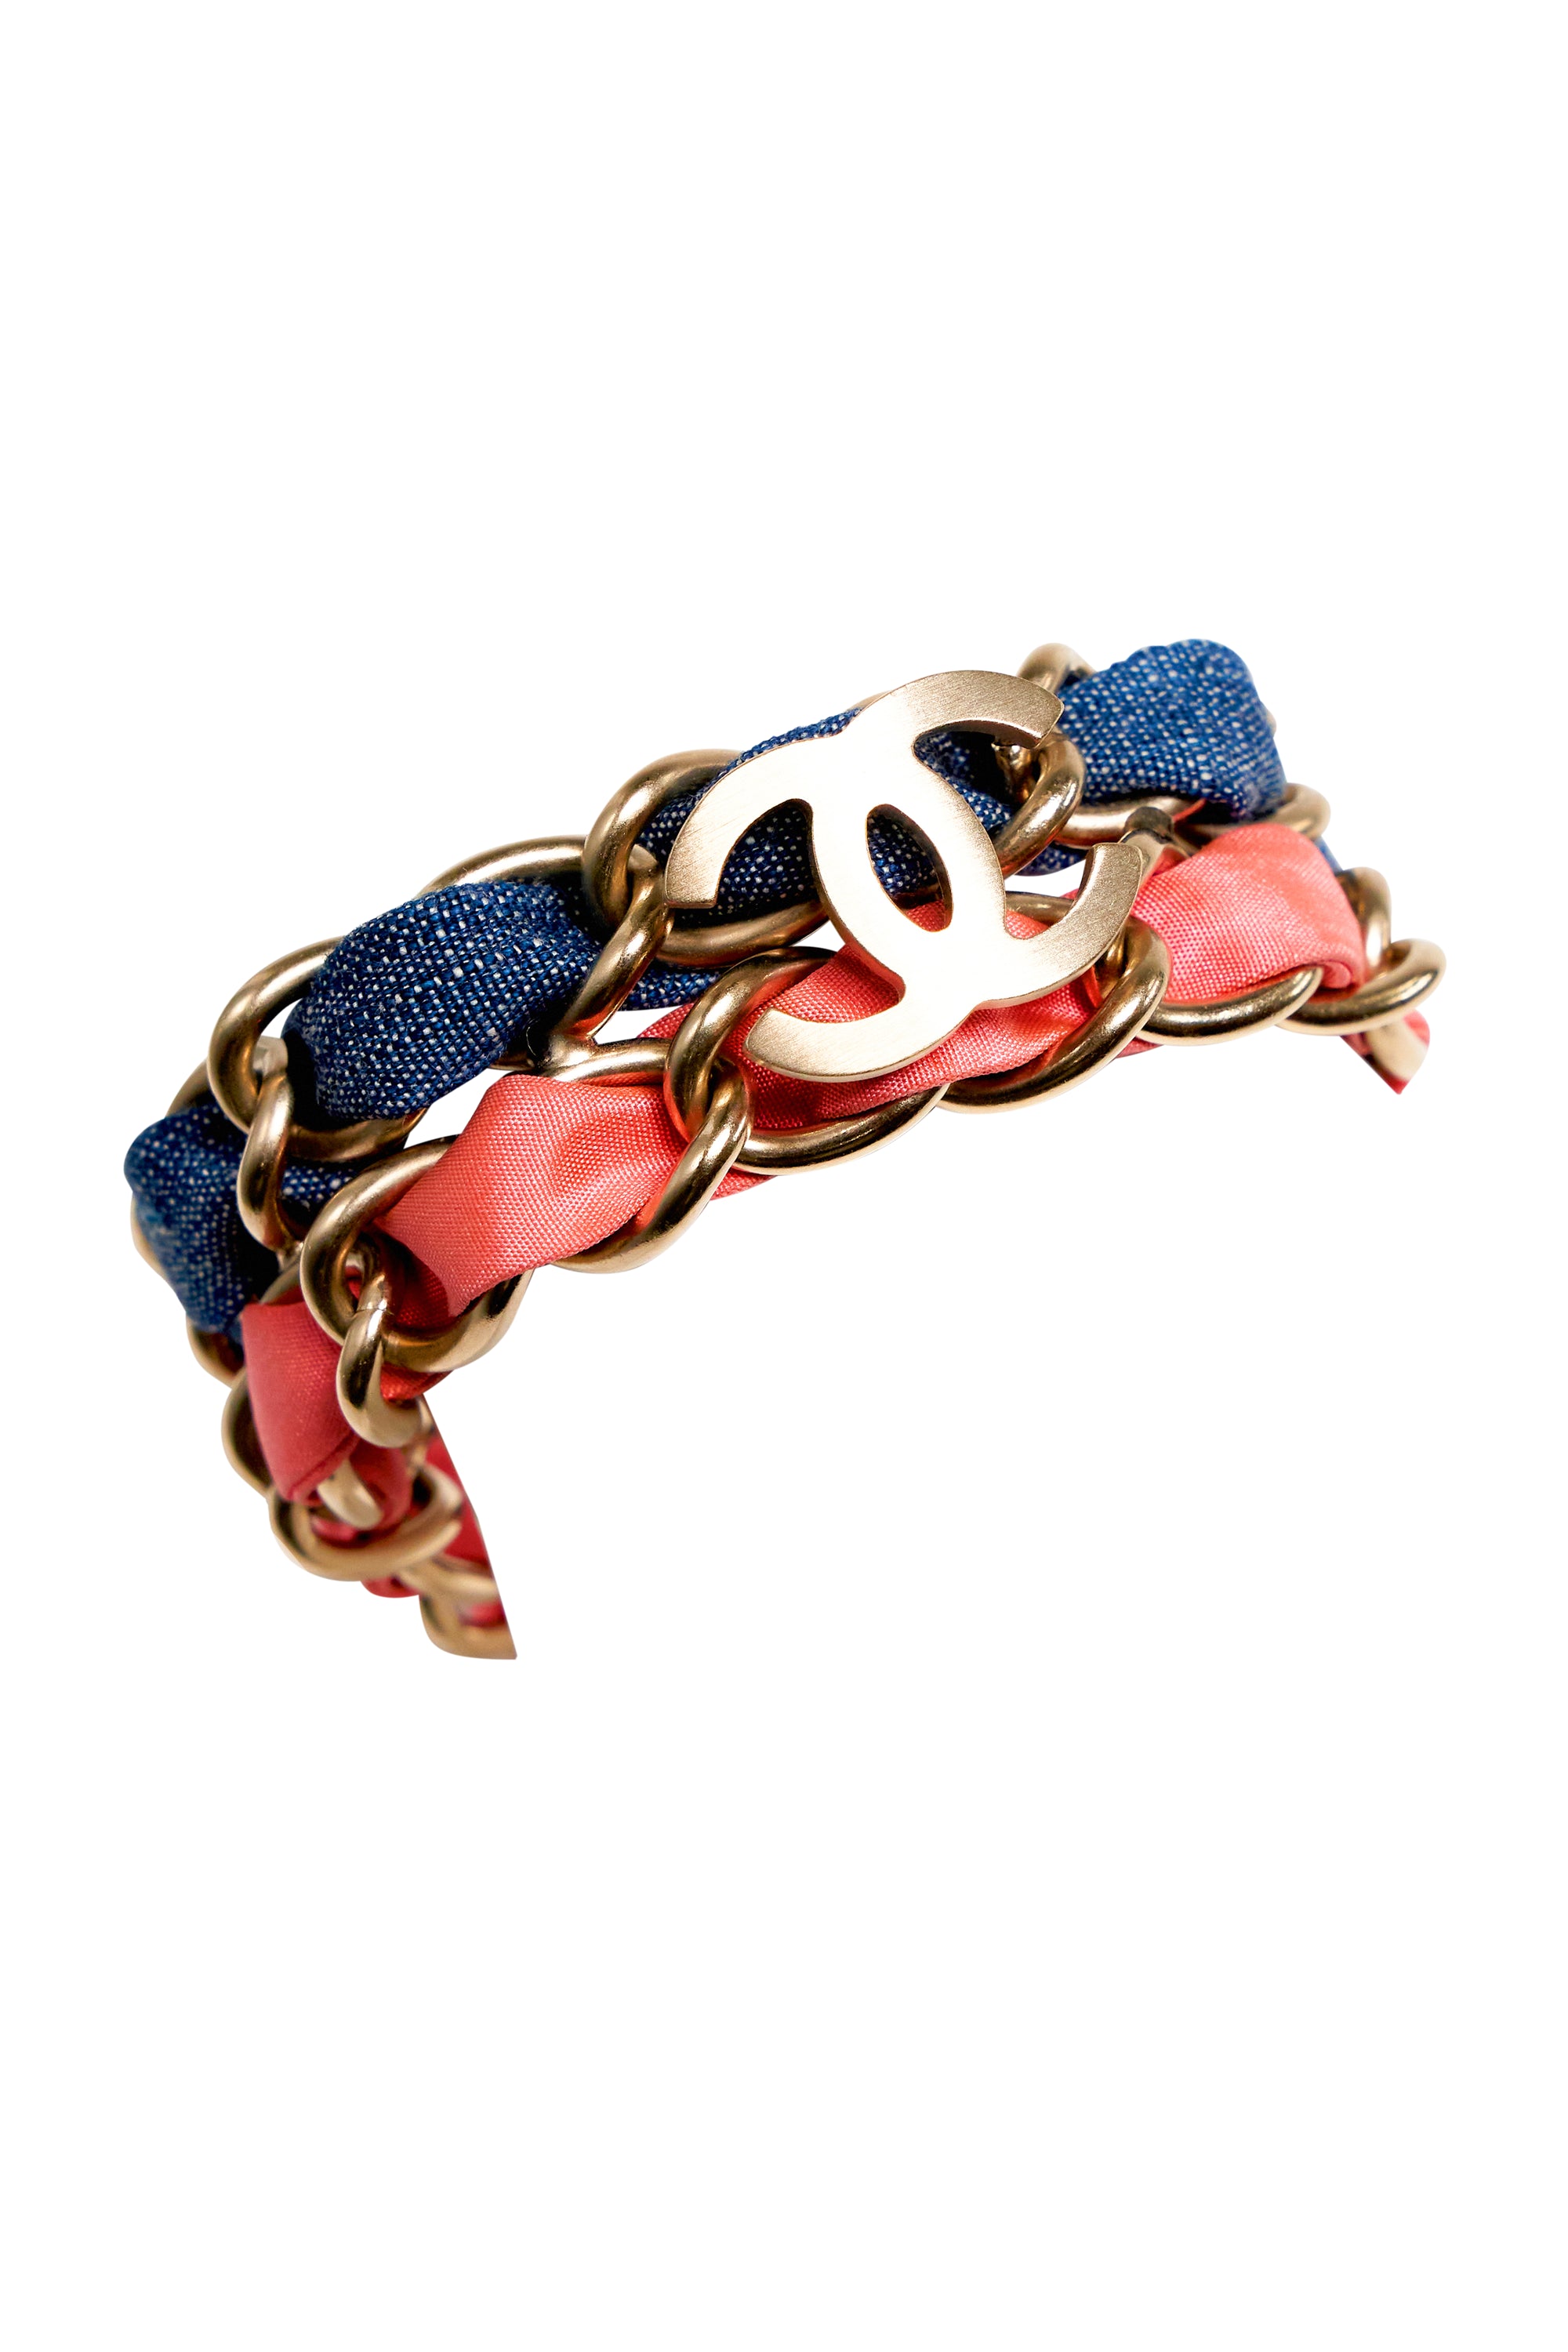 Chanel Pink and Denim Gold Tone Bracelet